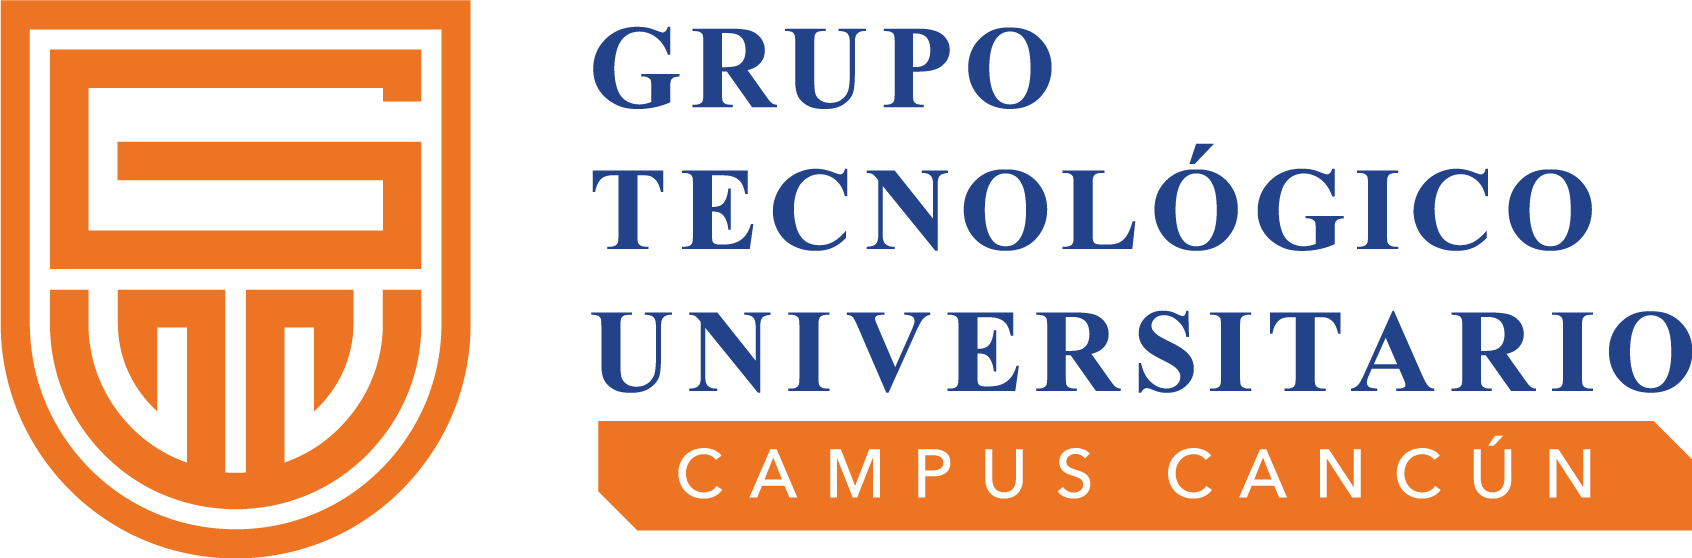 GTU Campus Cancún - E LEARNING